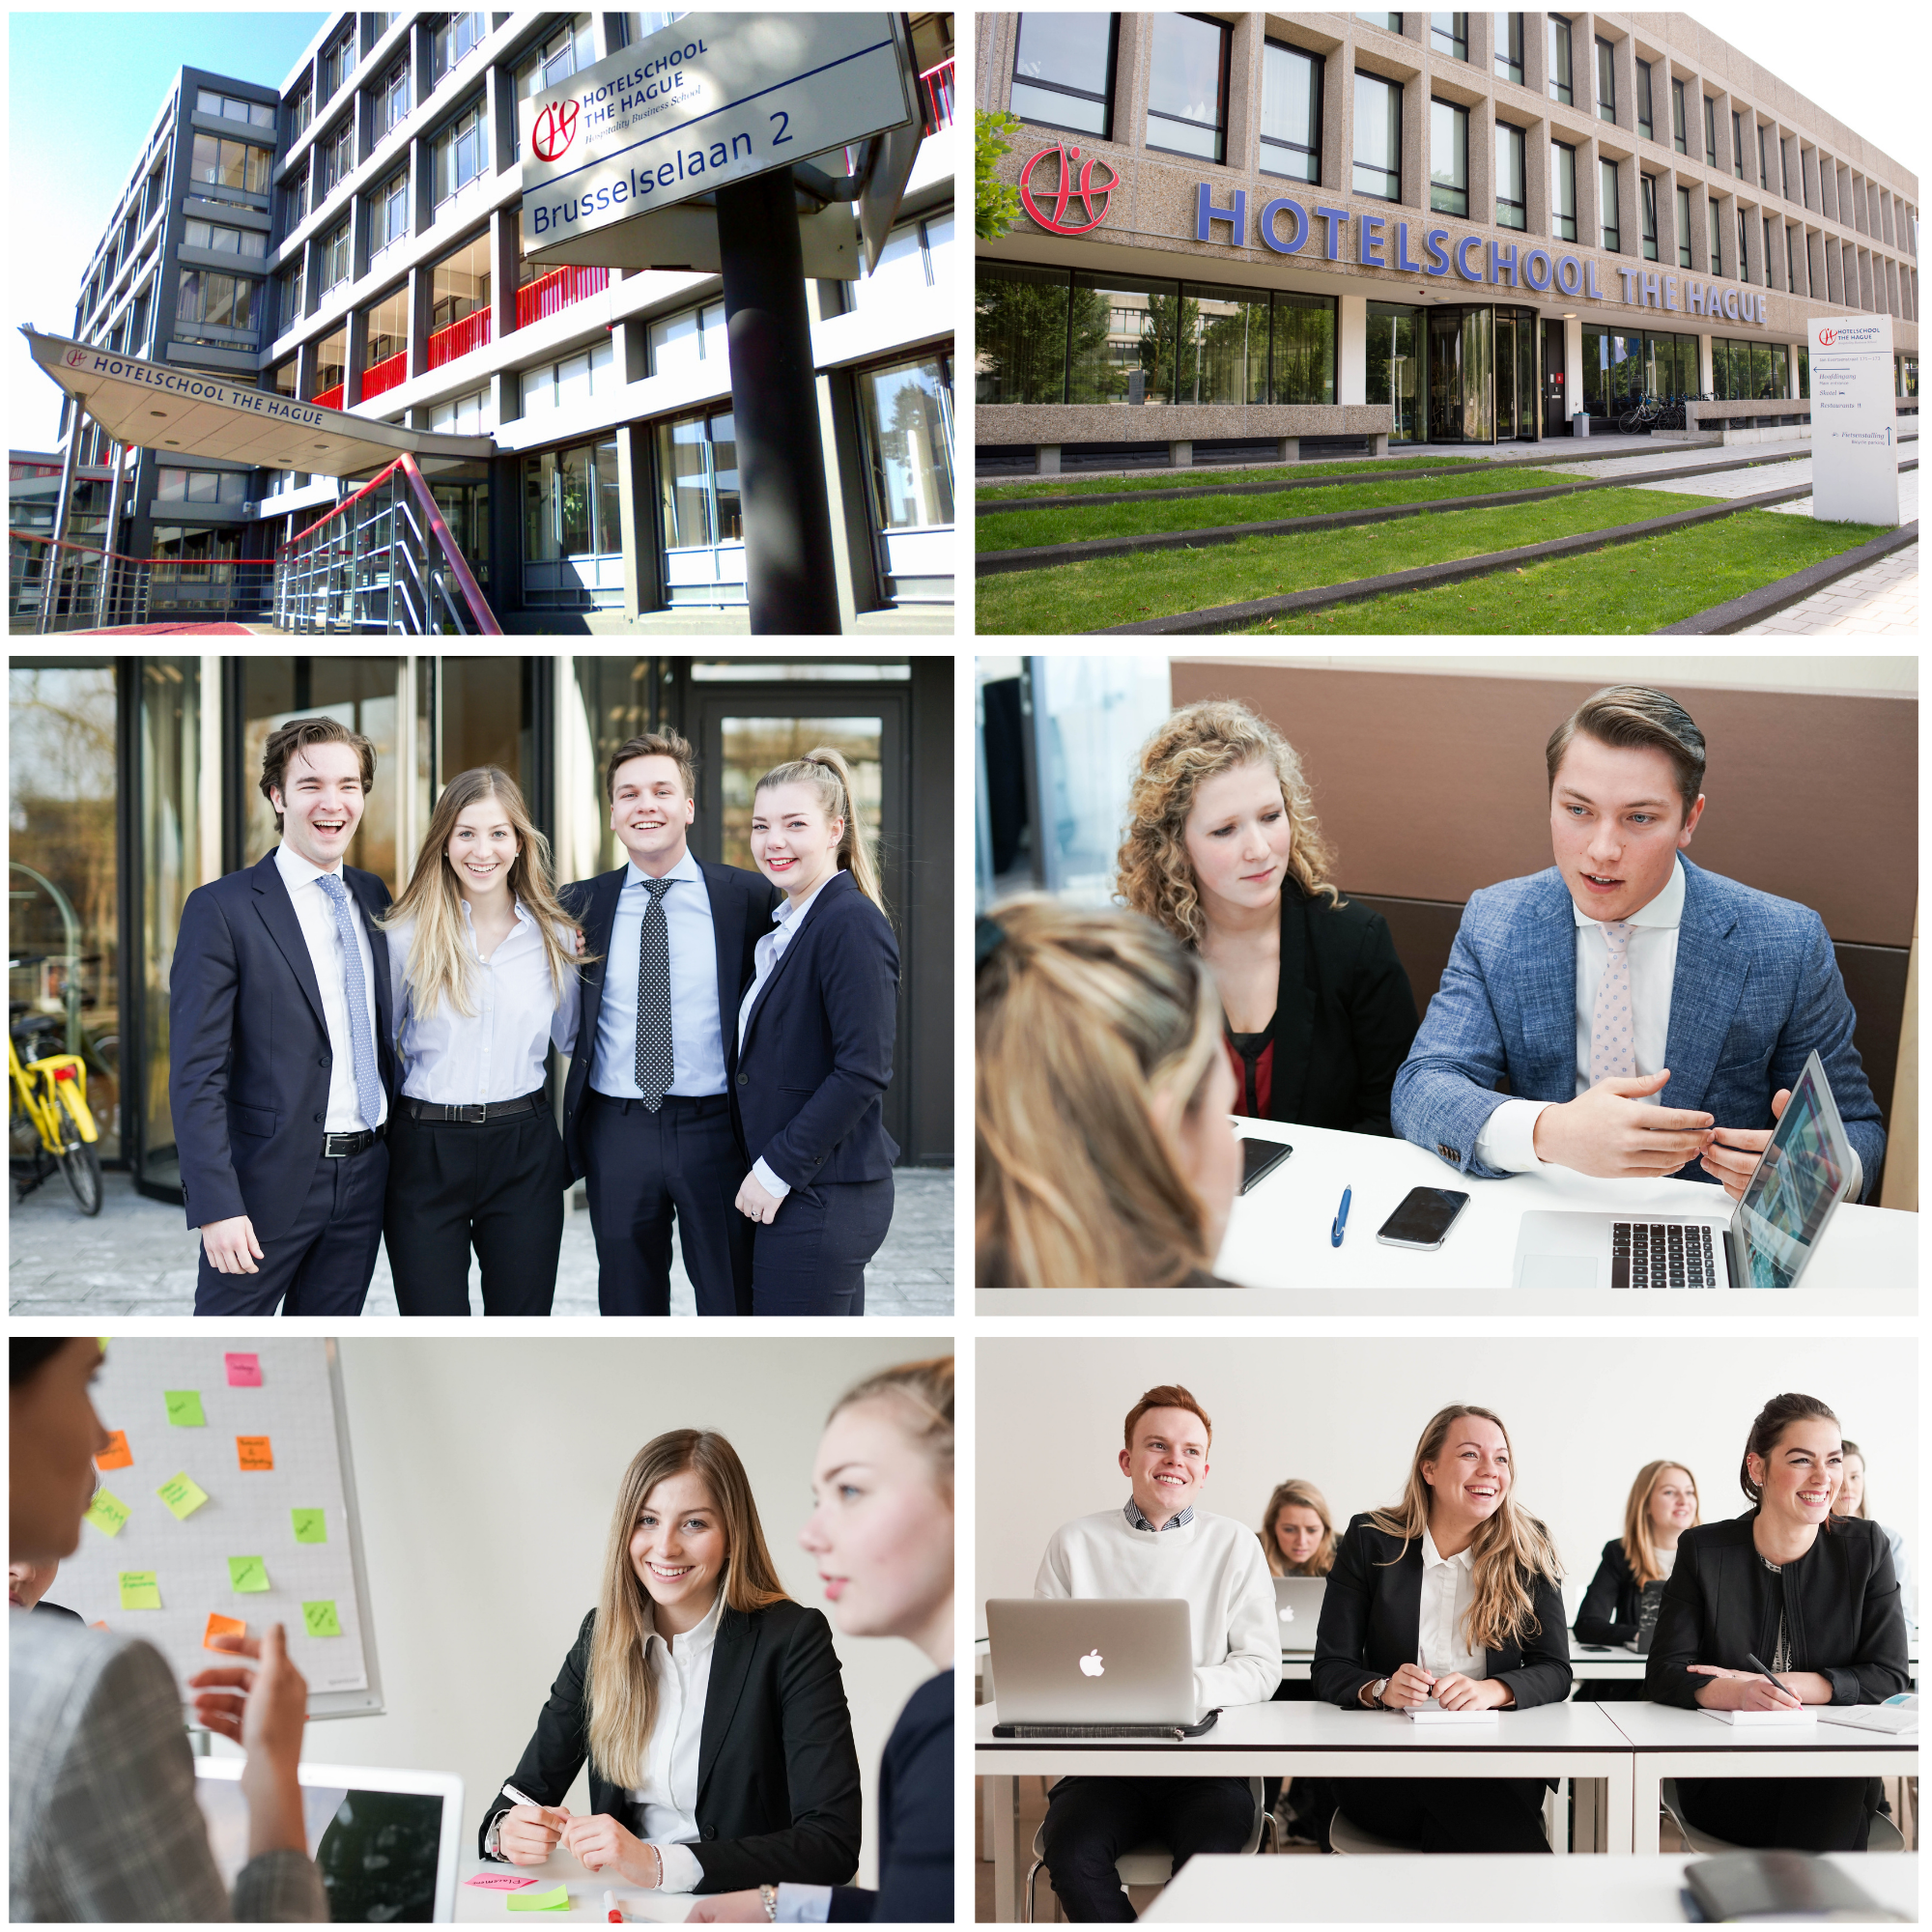 Hotelschool The Hague - Hospitality Business School Bildmaterial